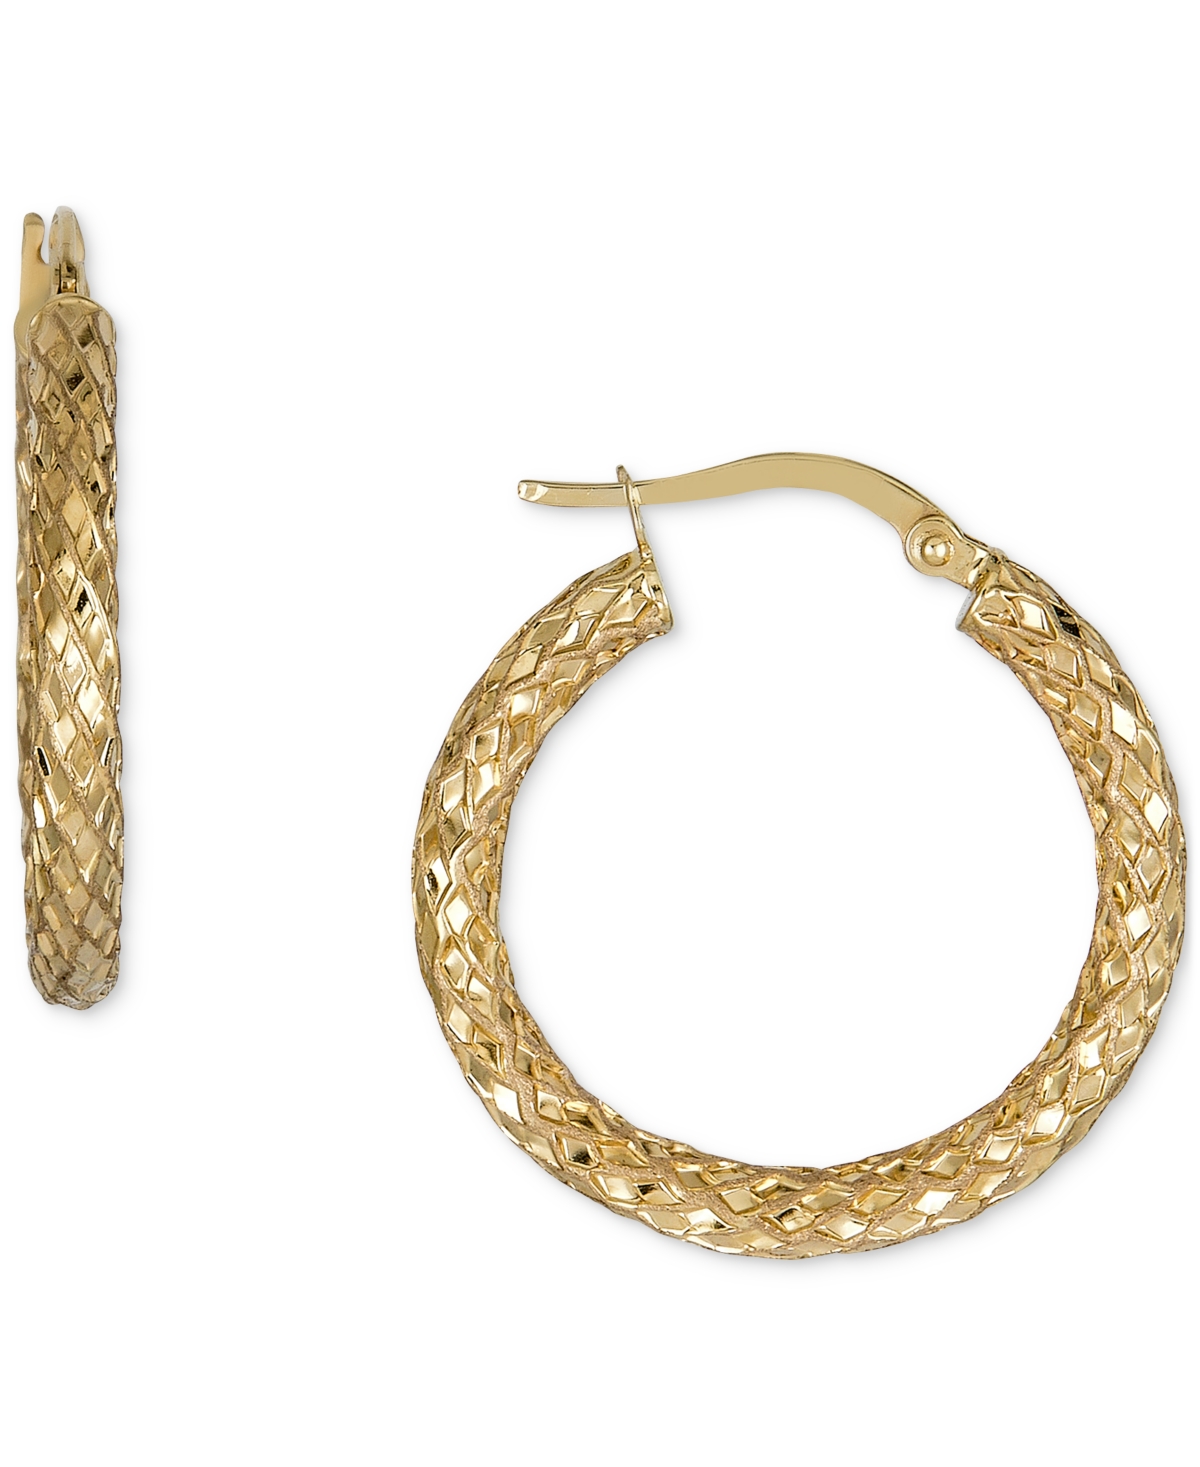 Snake Texture Hoop Earrings in 10k Gold 25mm - Yellow Gold